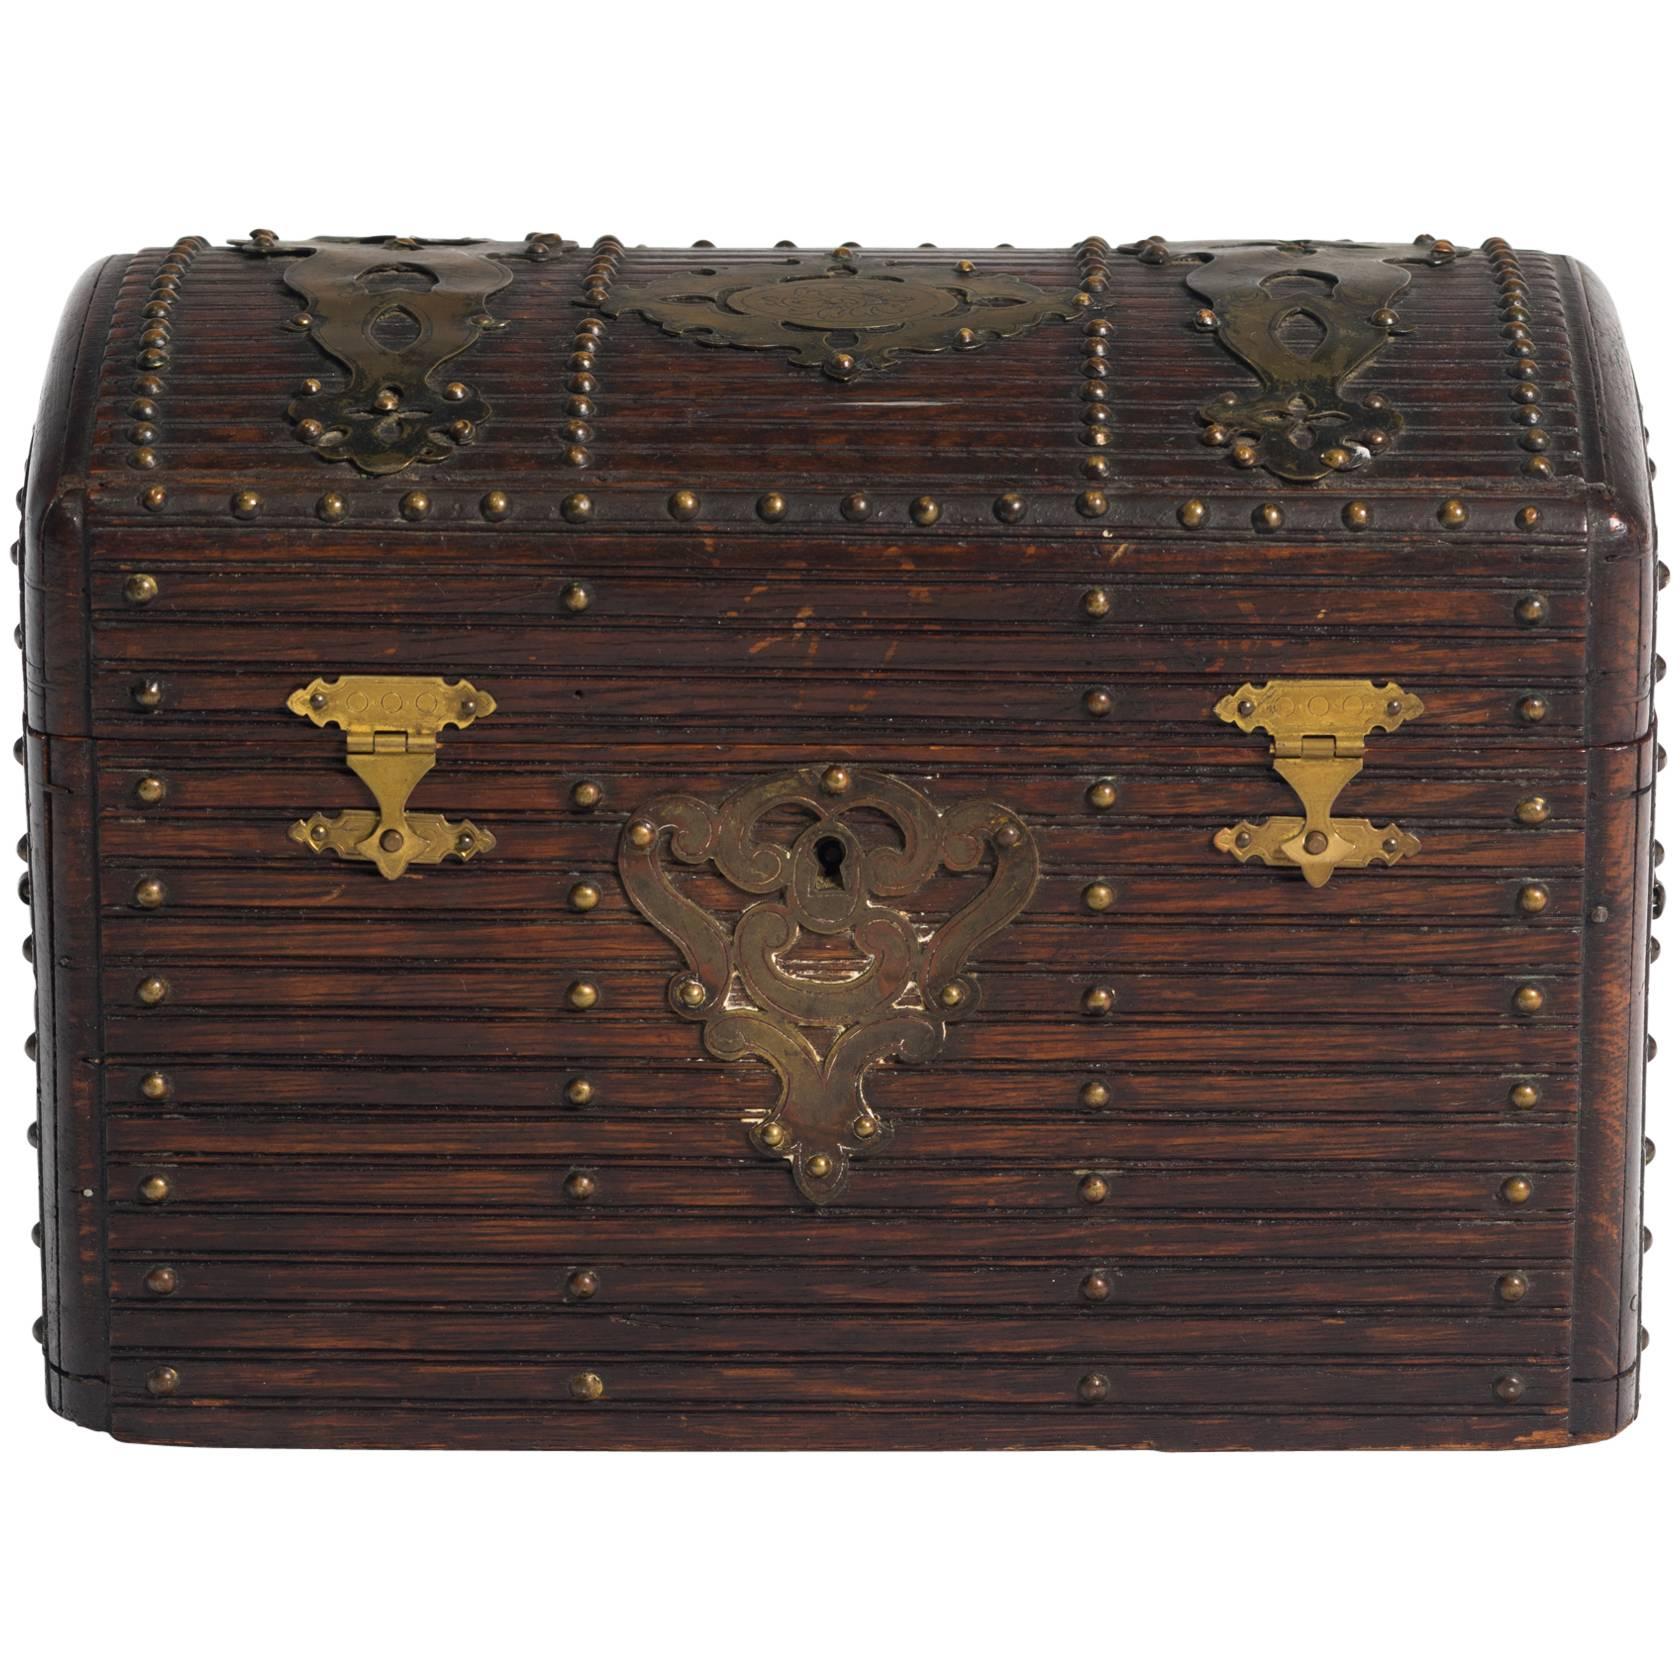 19th Century Wood and Brass Box